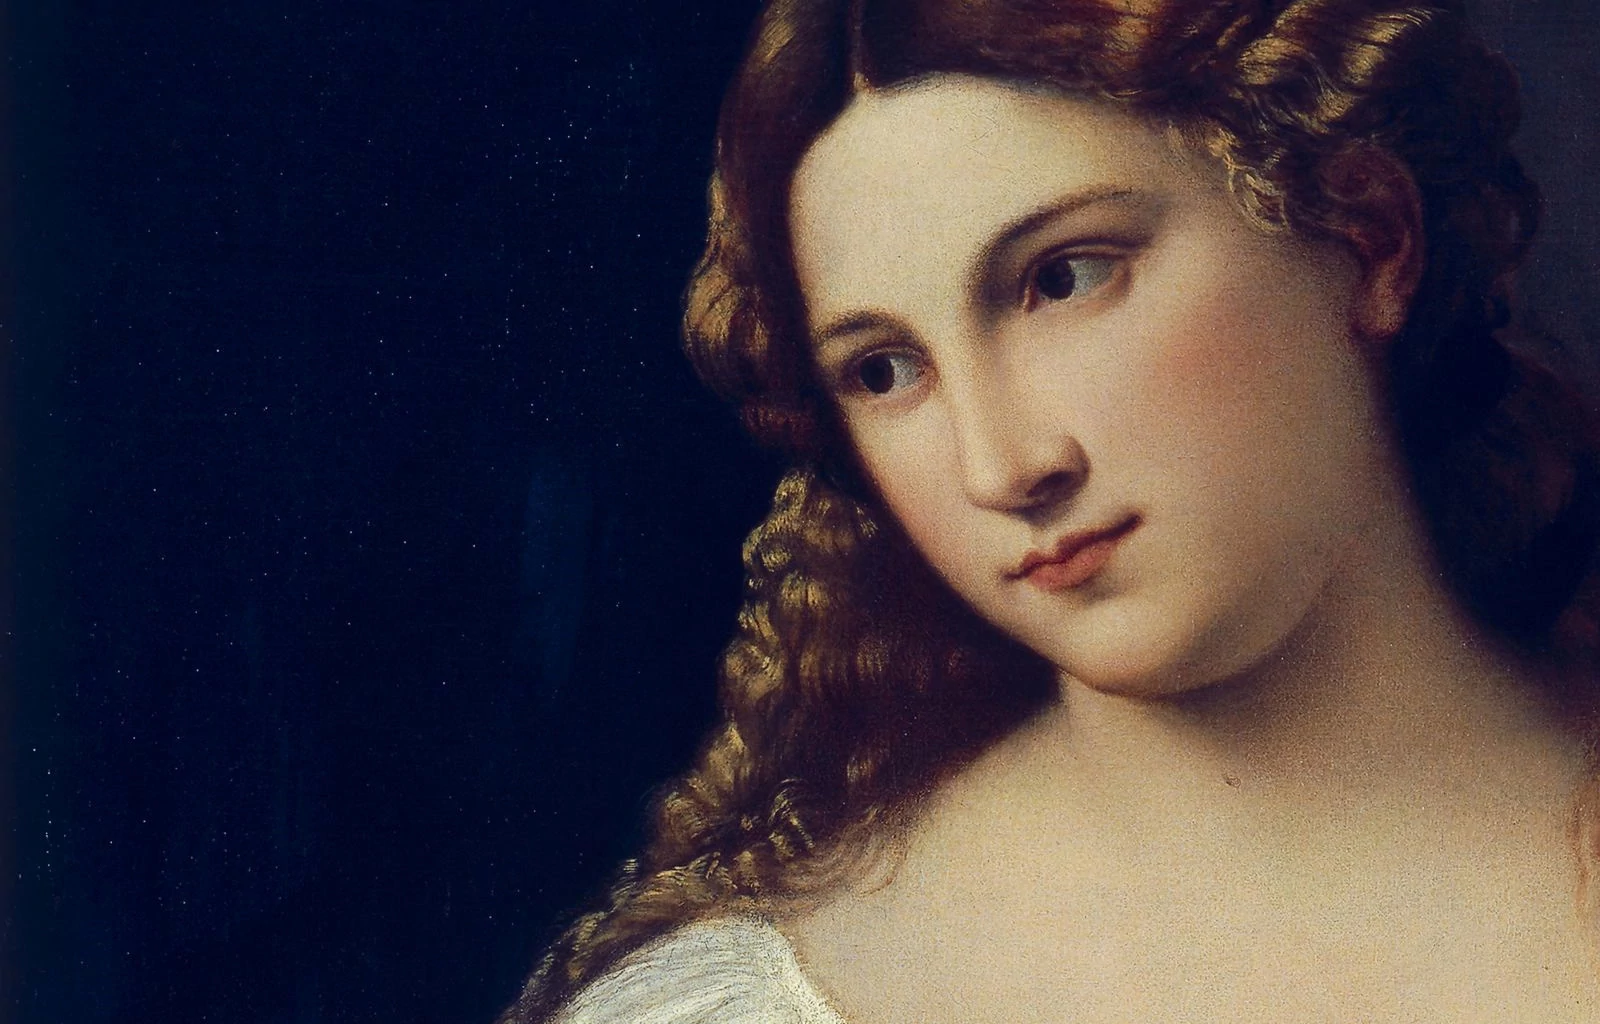 Flora, Titian